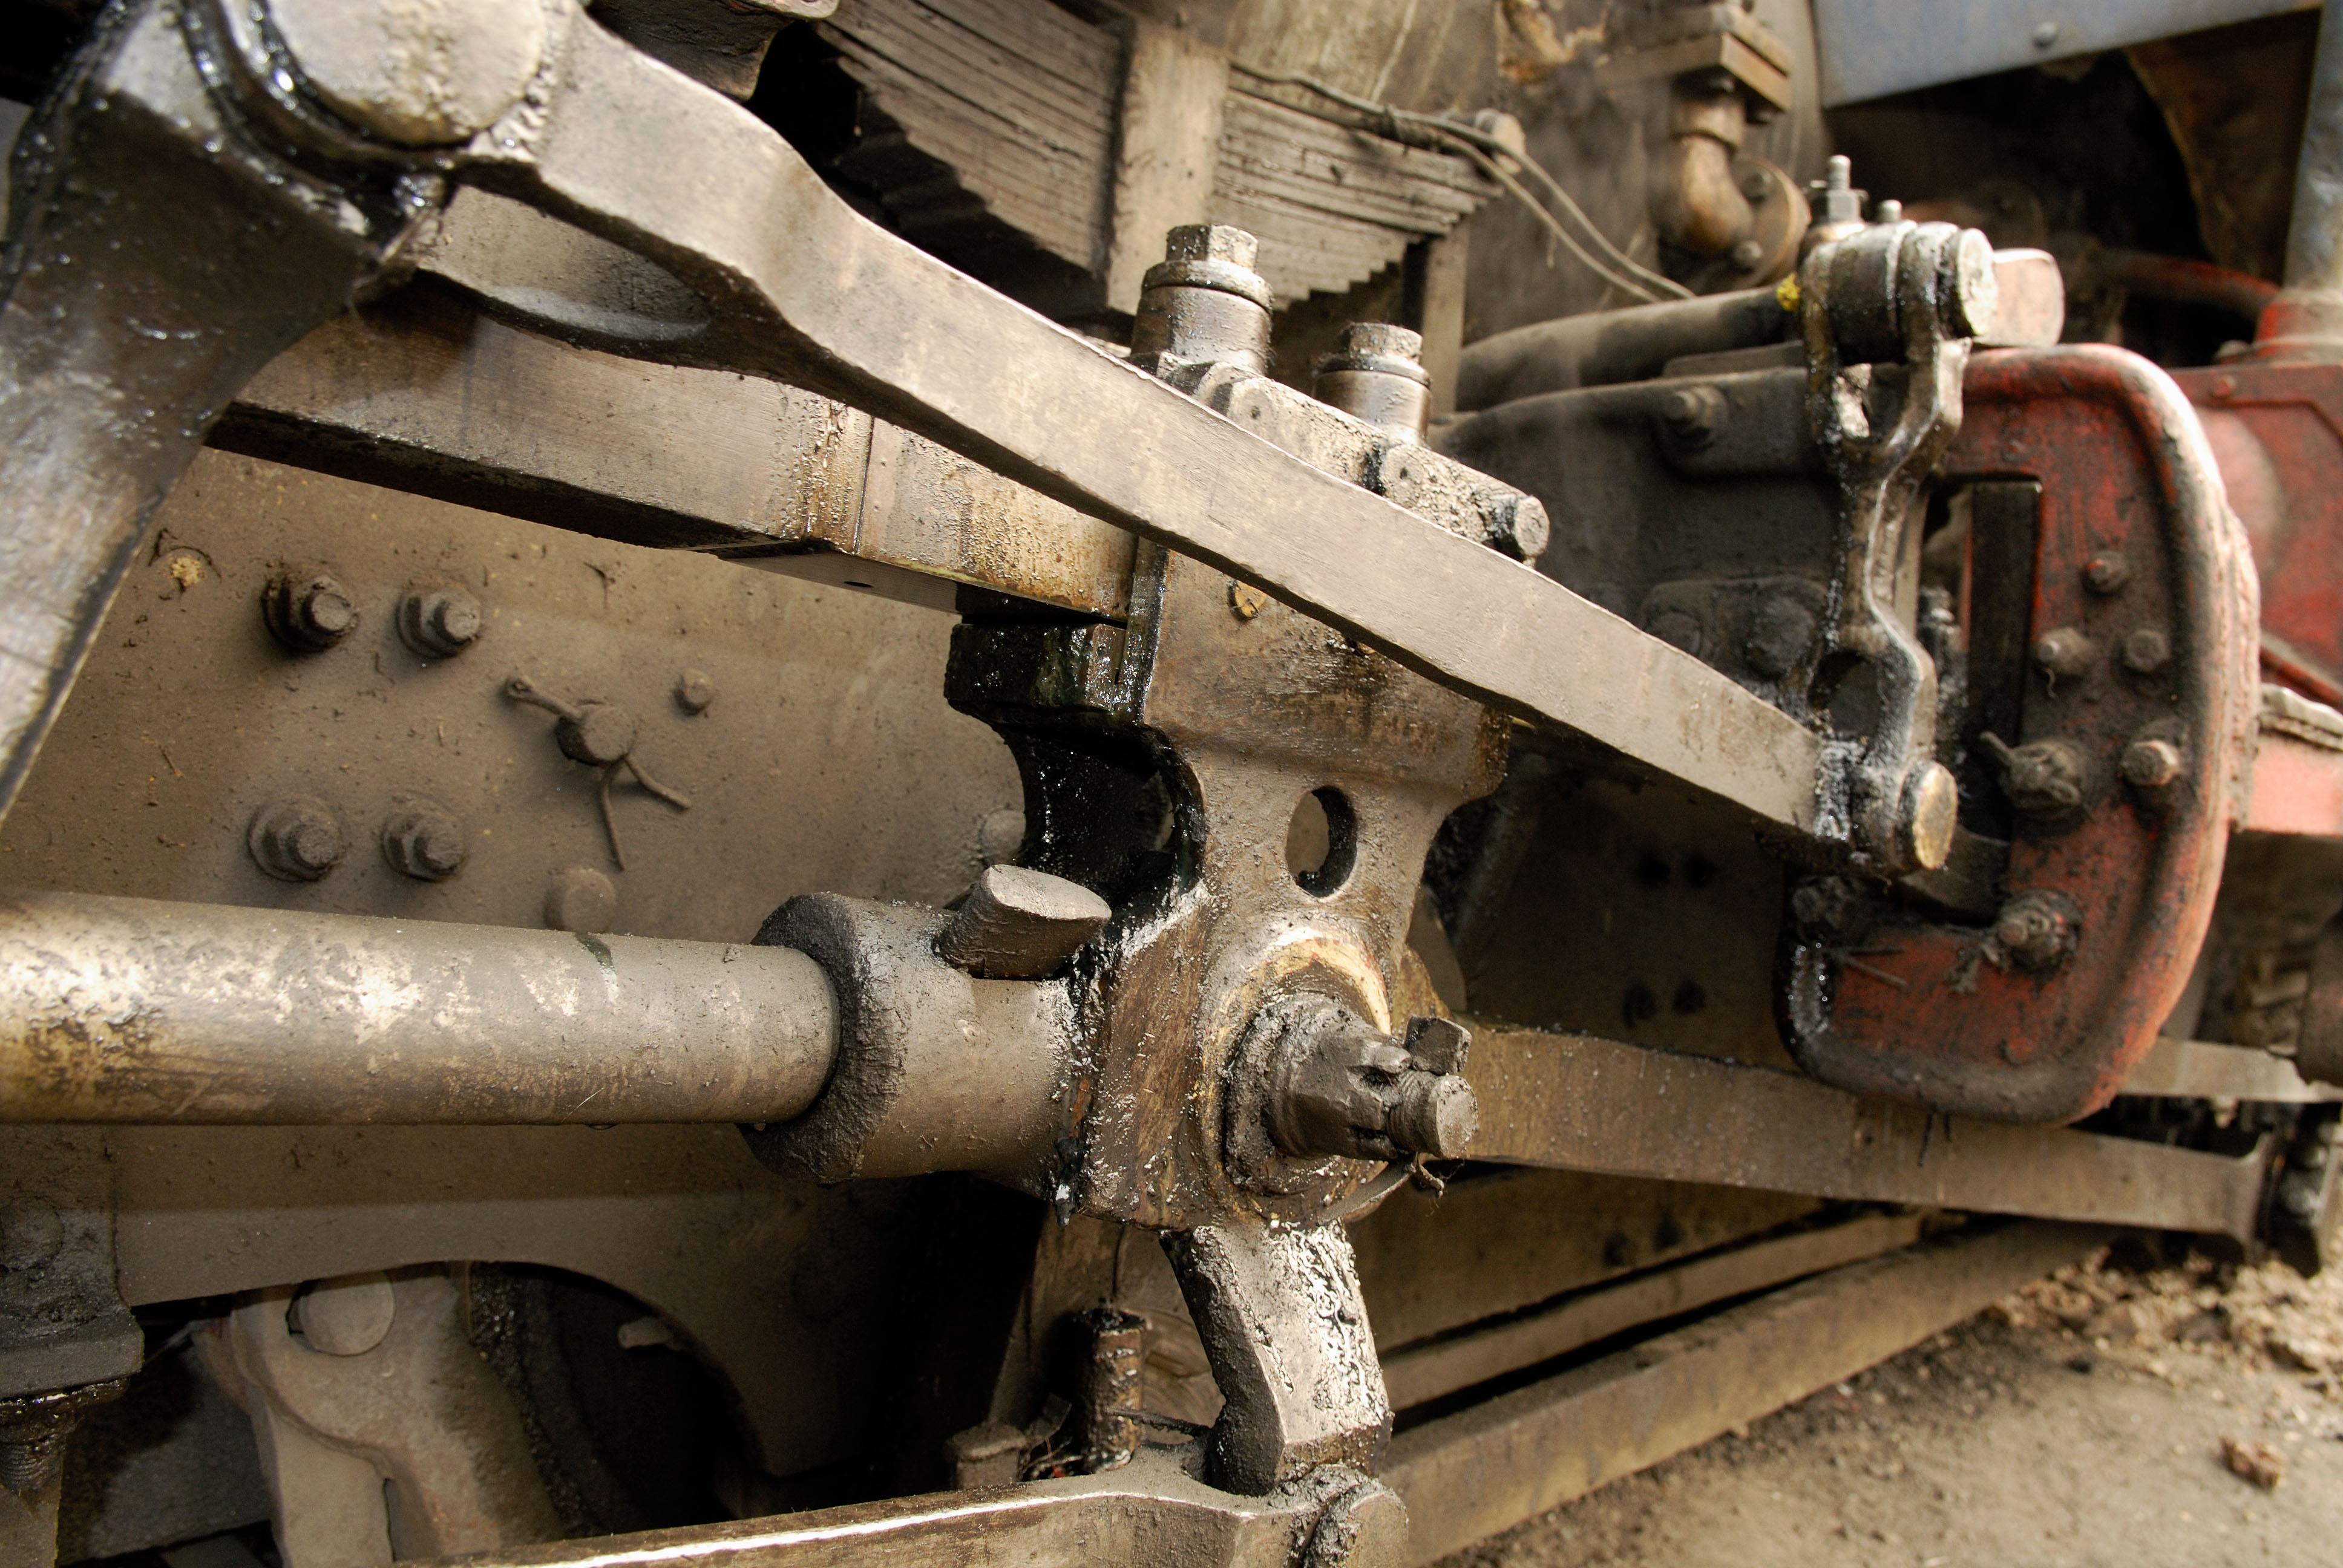 SB06215-Toy-train-engine-detail.jpg